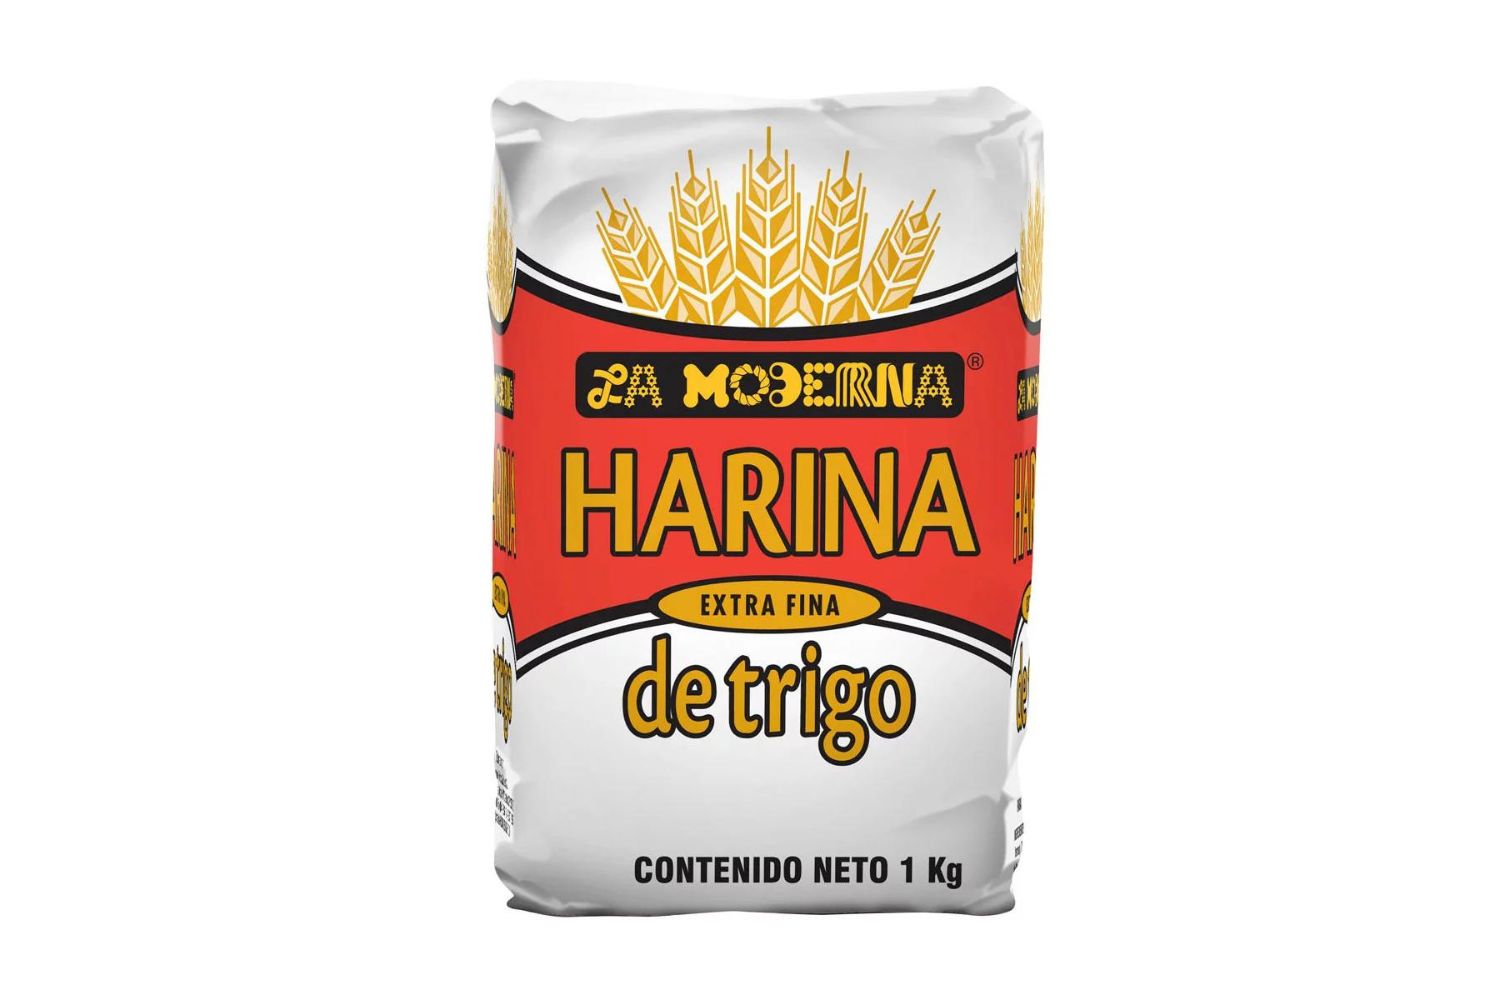 18-captivating-facts-about-harina-de-trigo